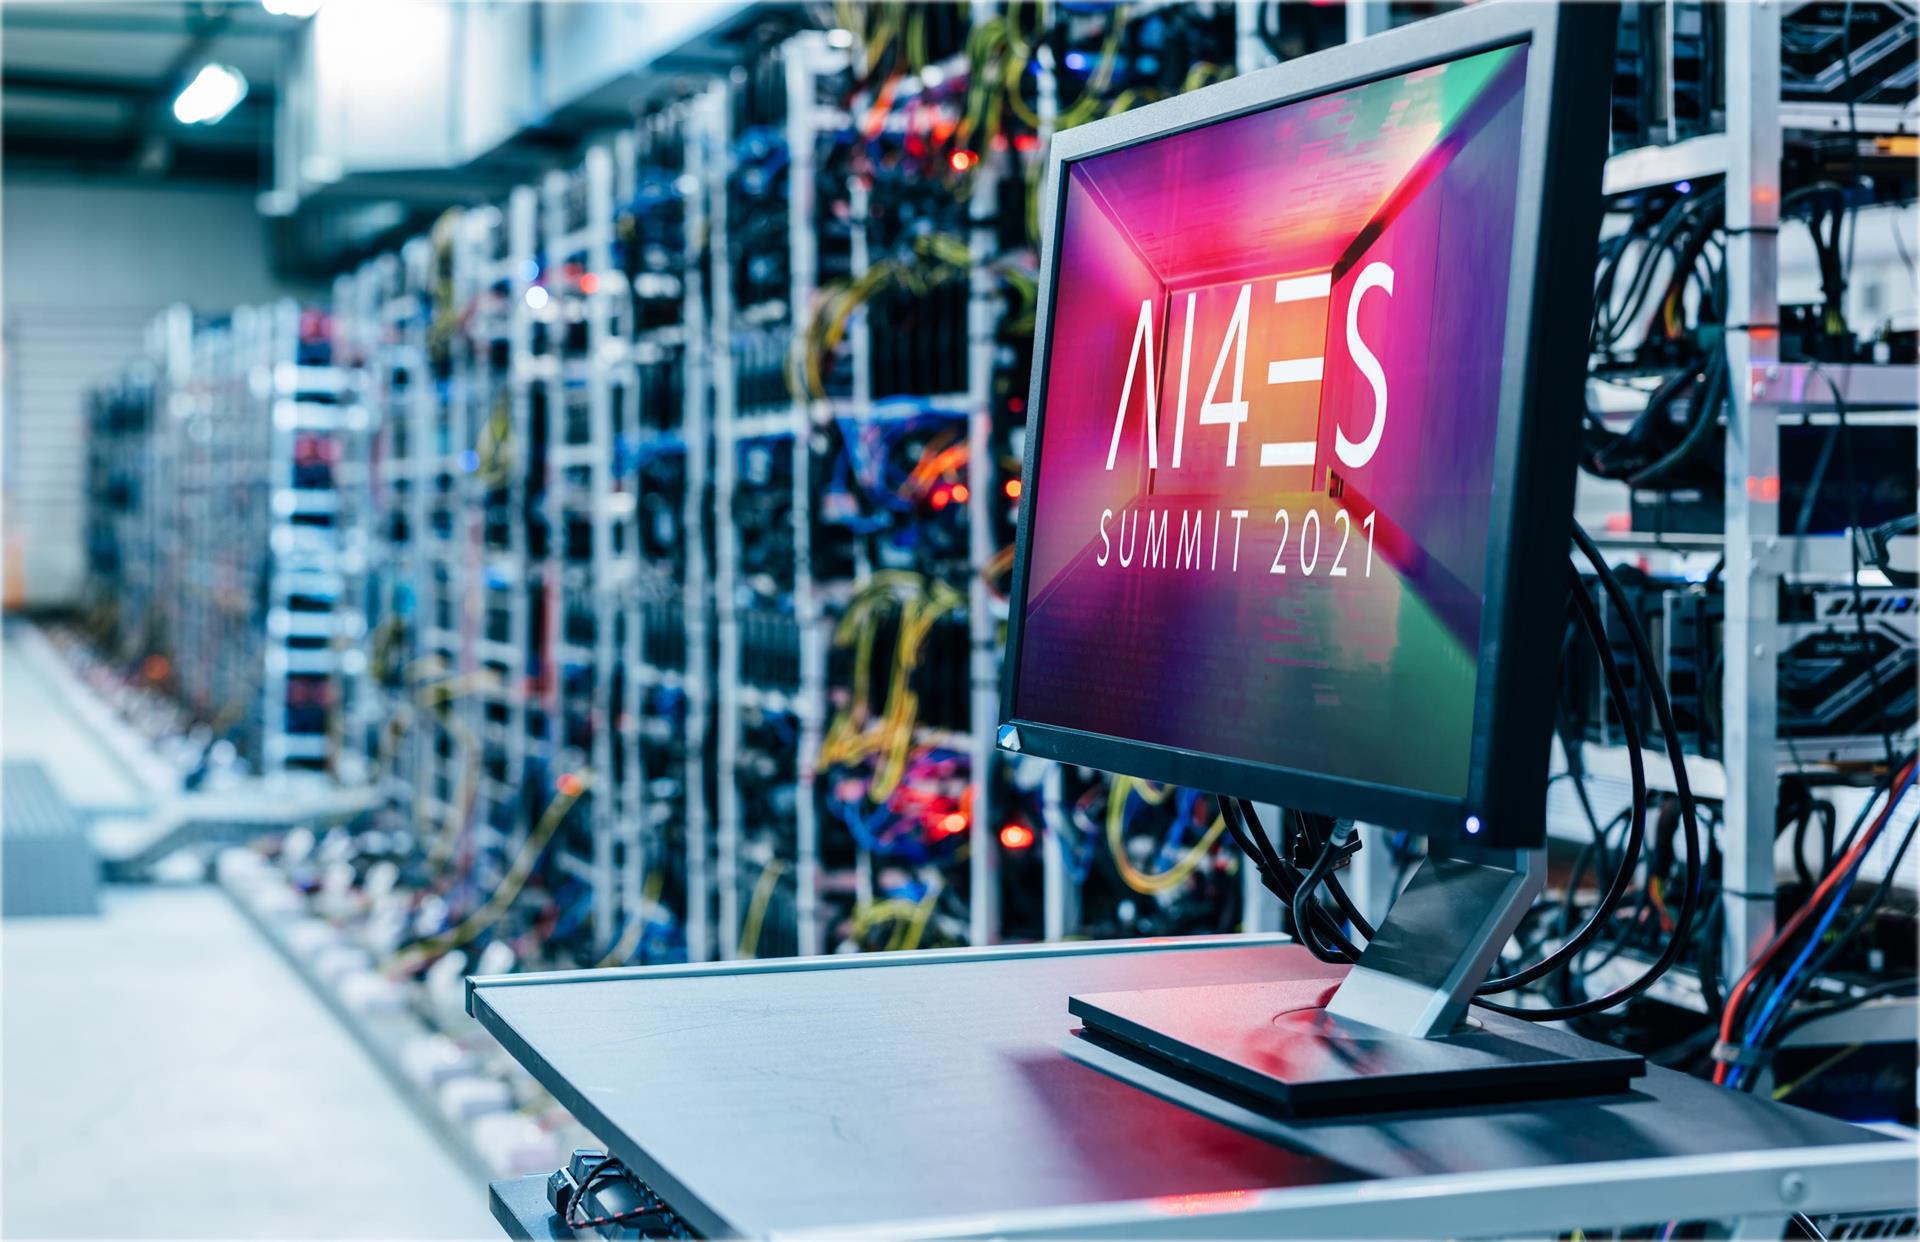 La red AI4ES busca situar a España a la cabeza en inteligencia artificial.